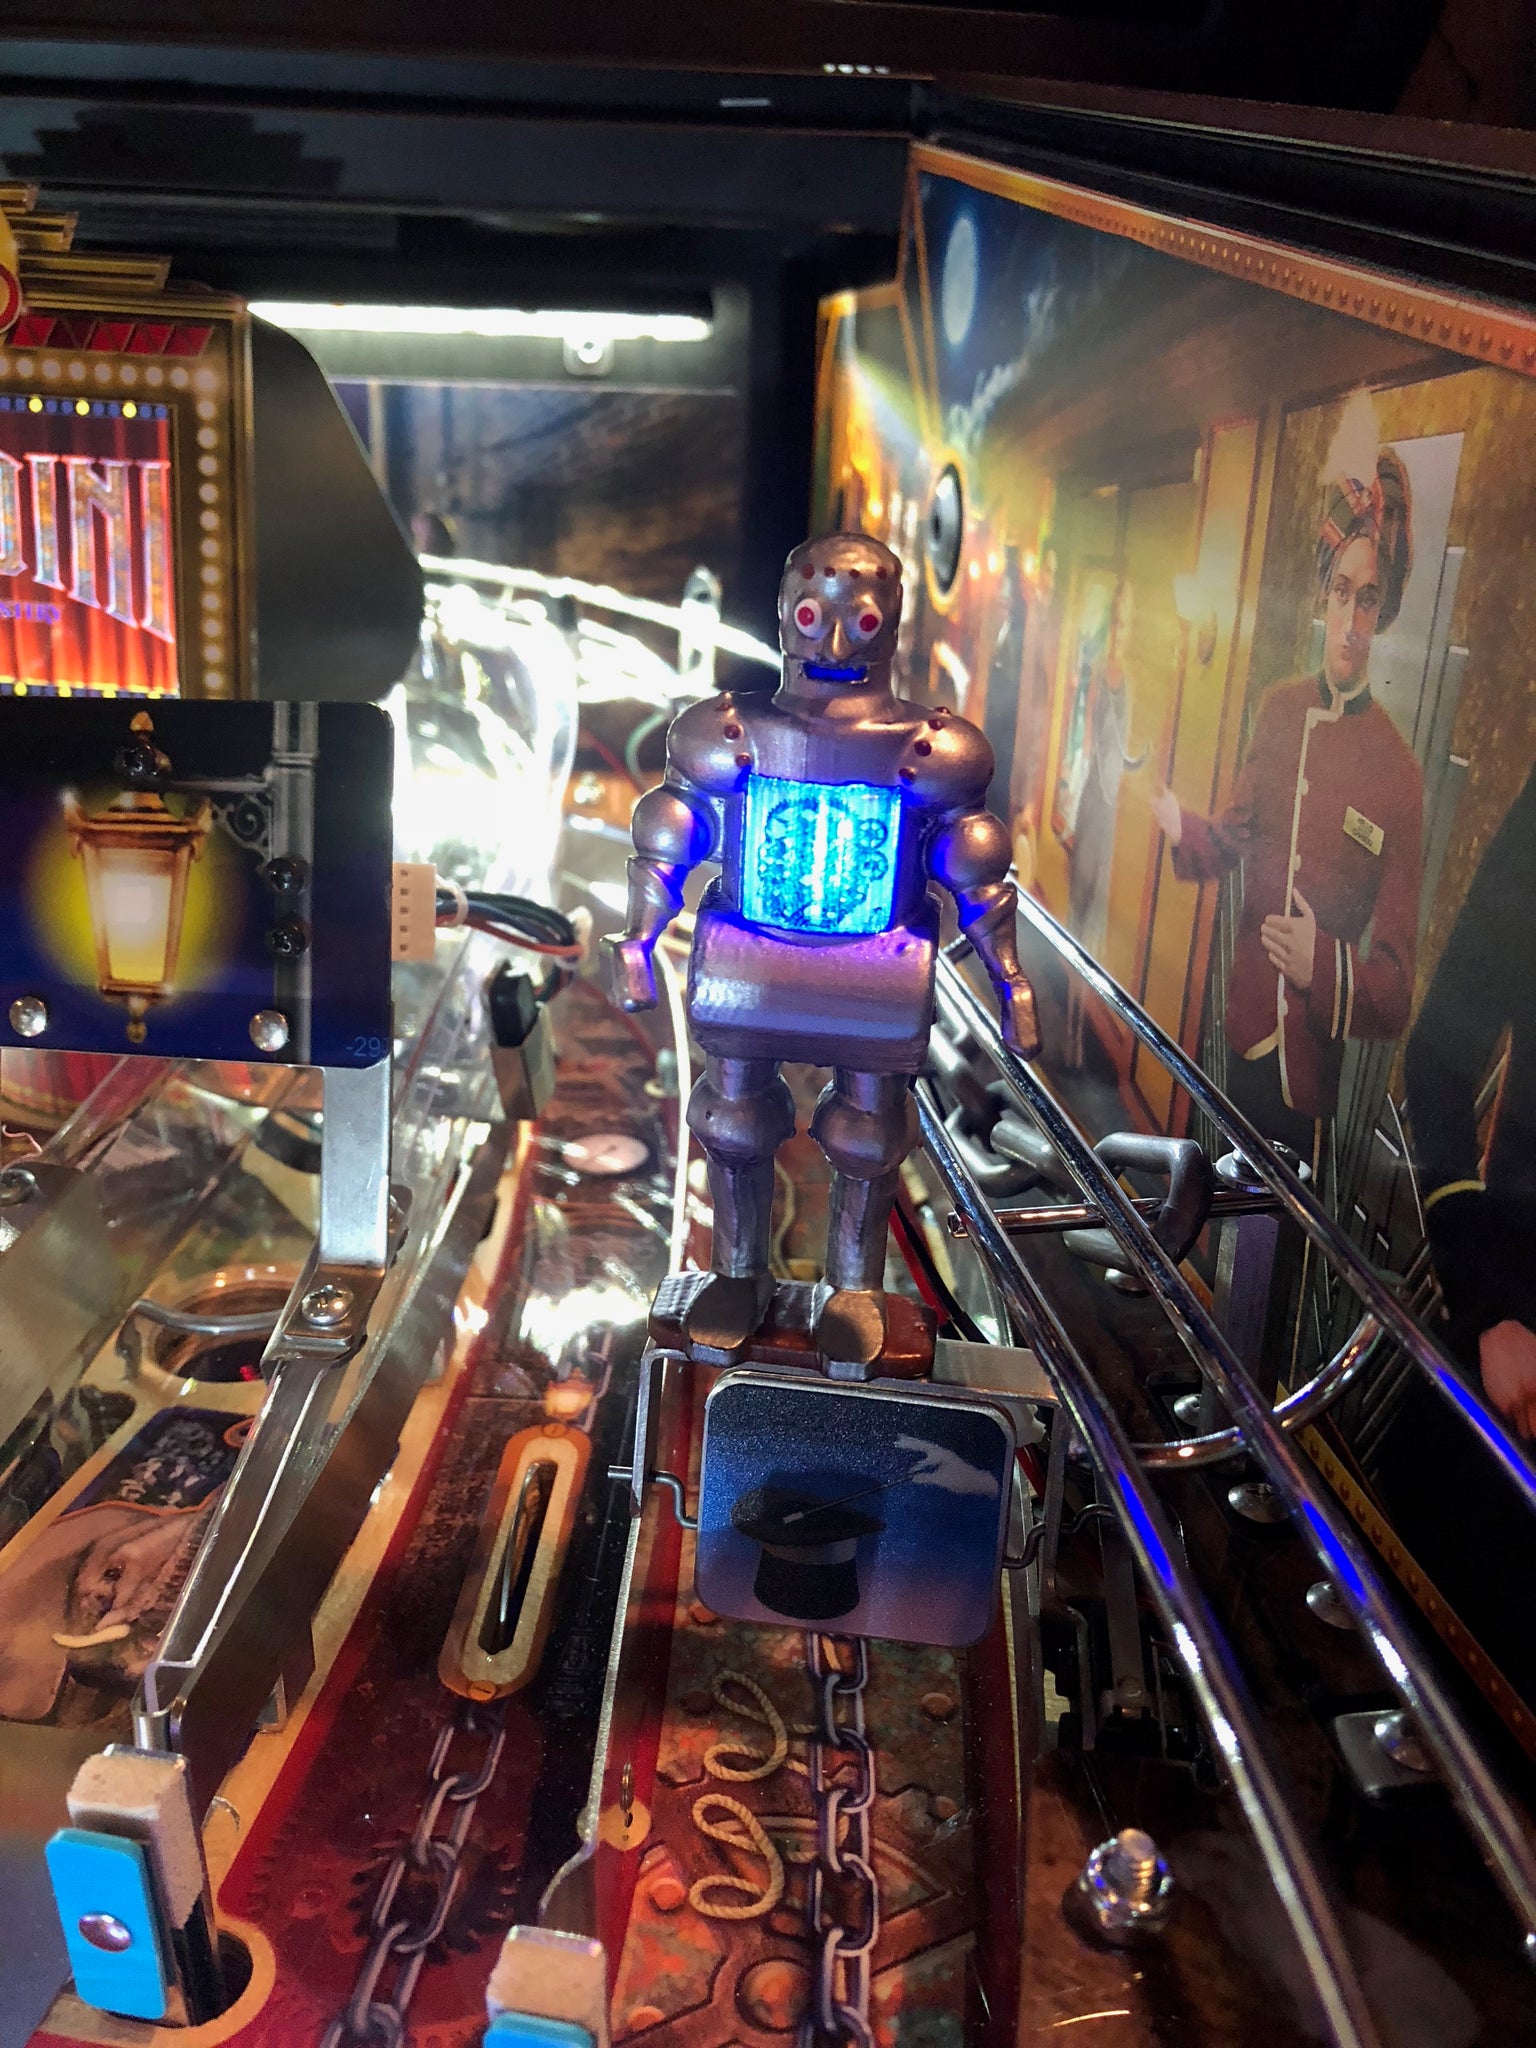 API Houdini "Q The Robot" Illuminated custom Mod!